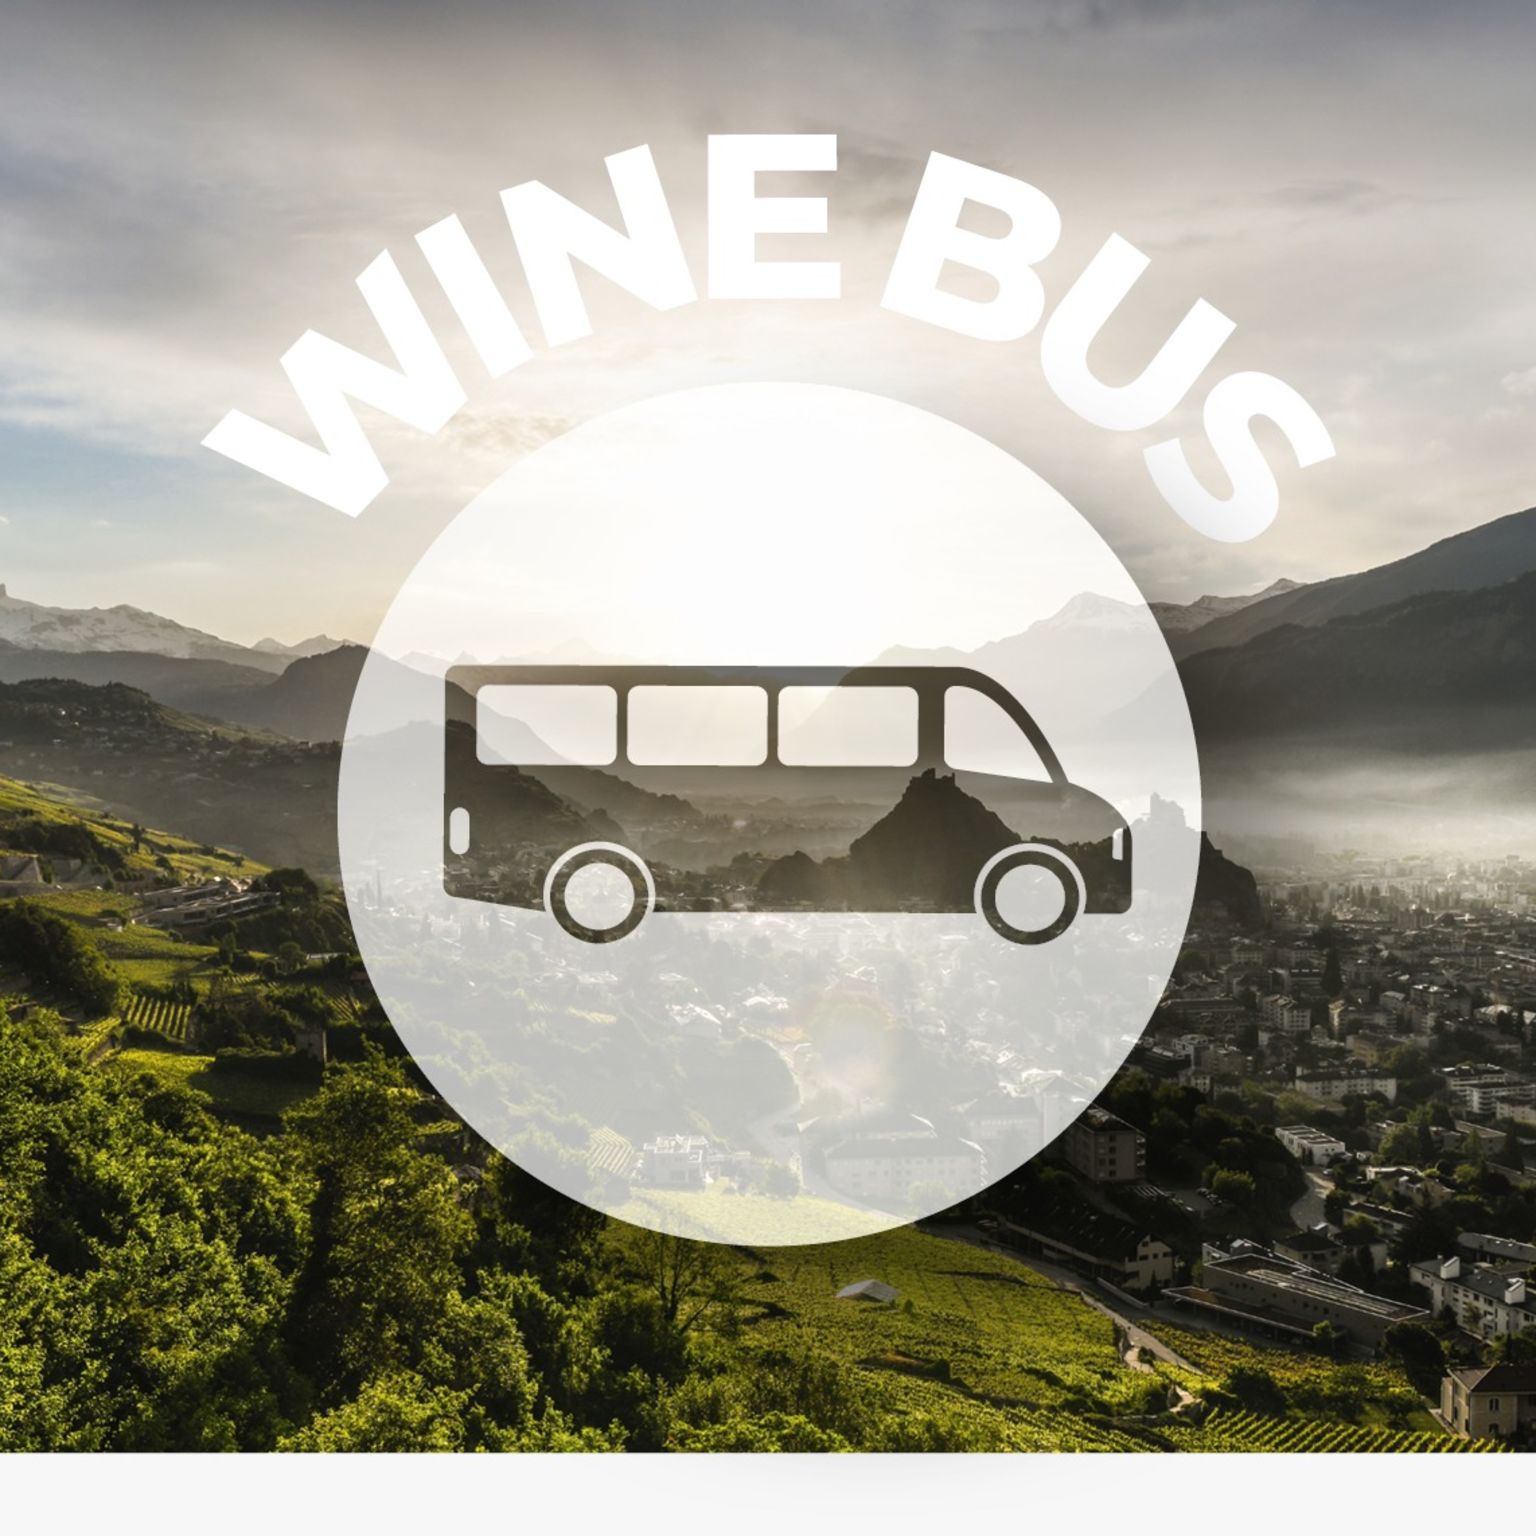 Wine Bus